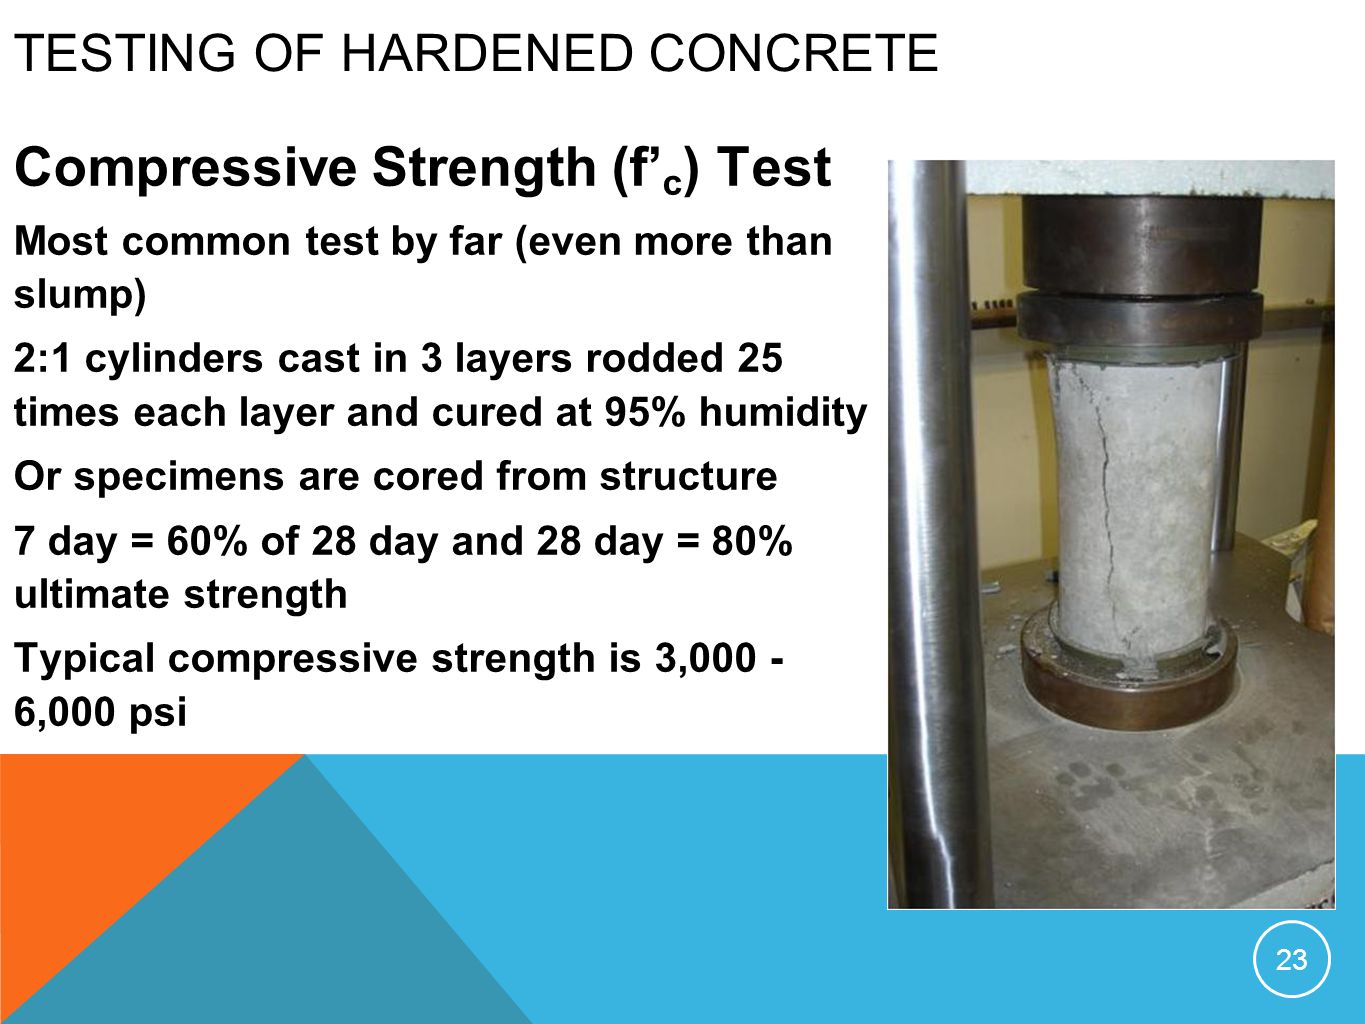 Concrete Testing